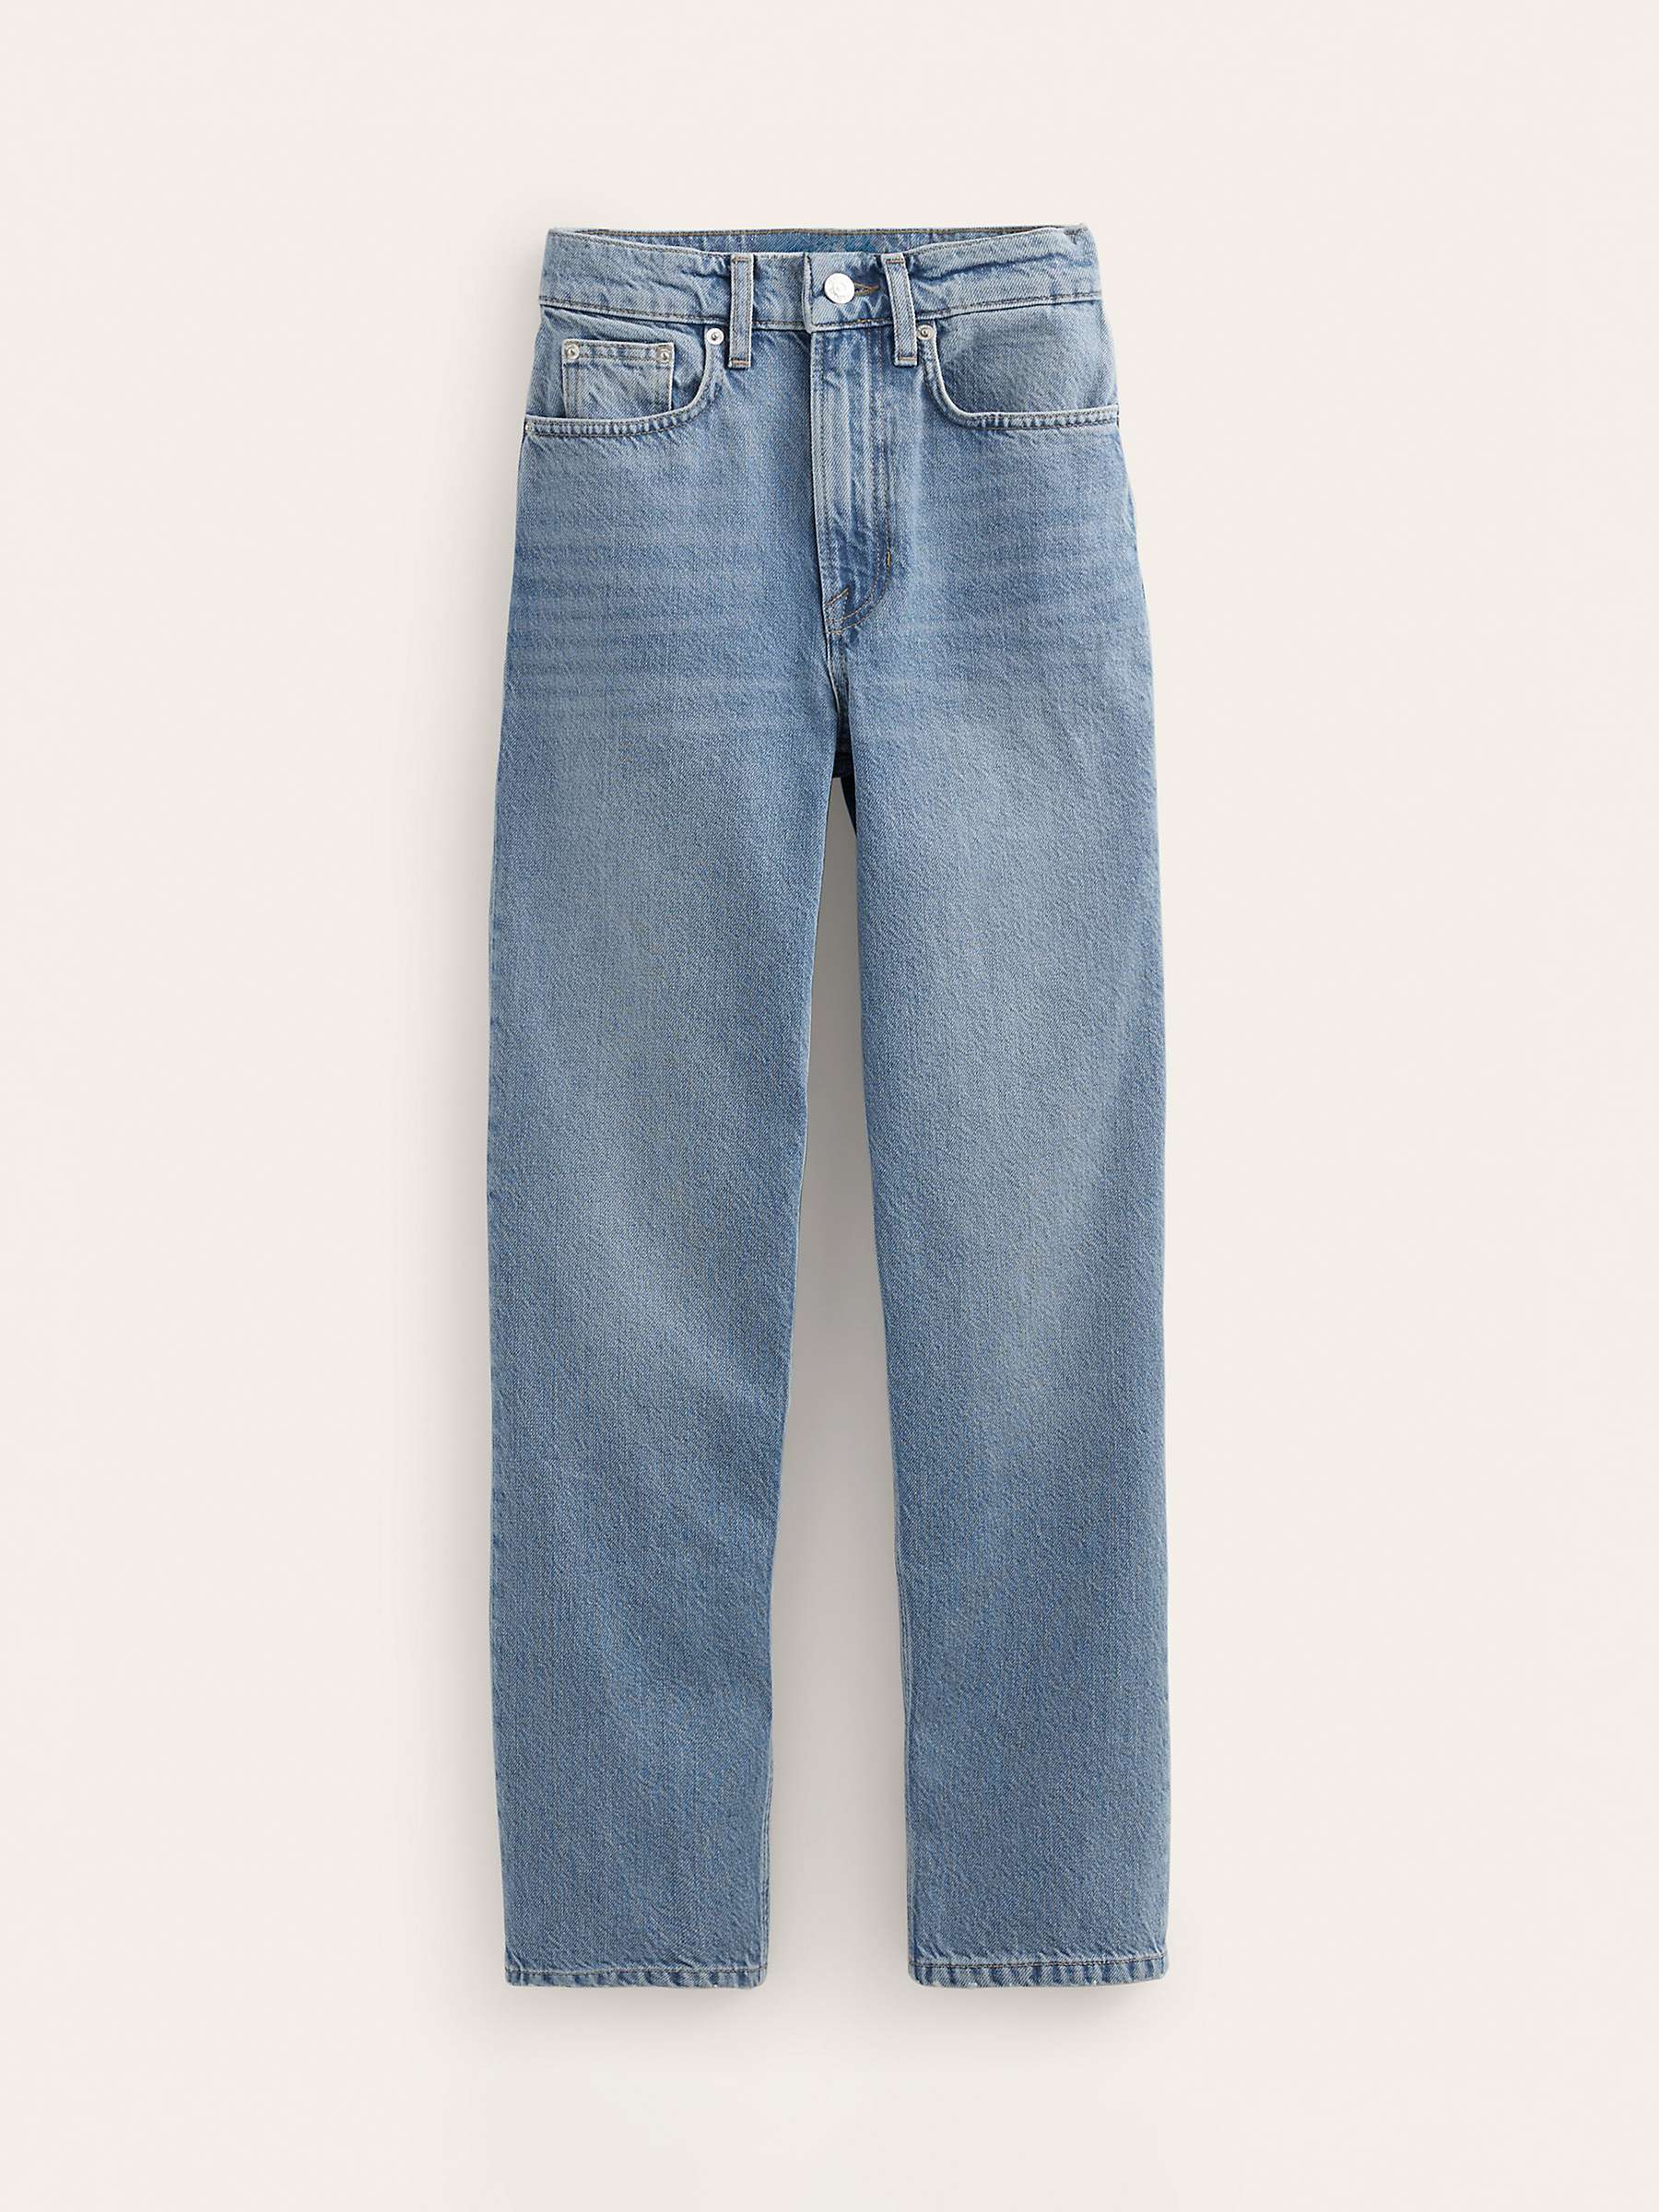 Buy Boden Mid-Rise Tapered Jeans, Light Mid Vintage Online at johnlewis.com